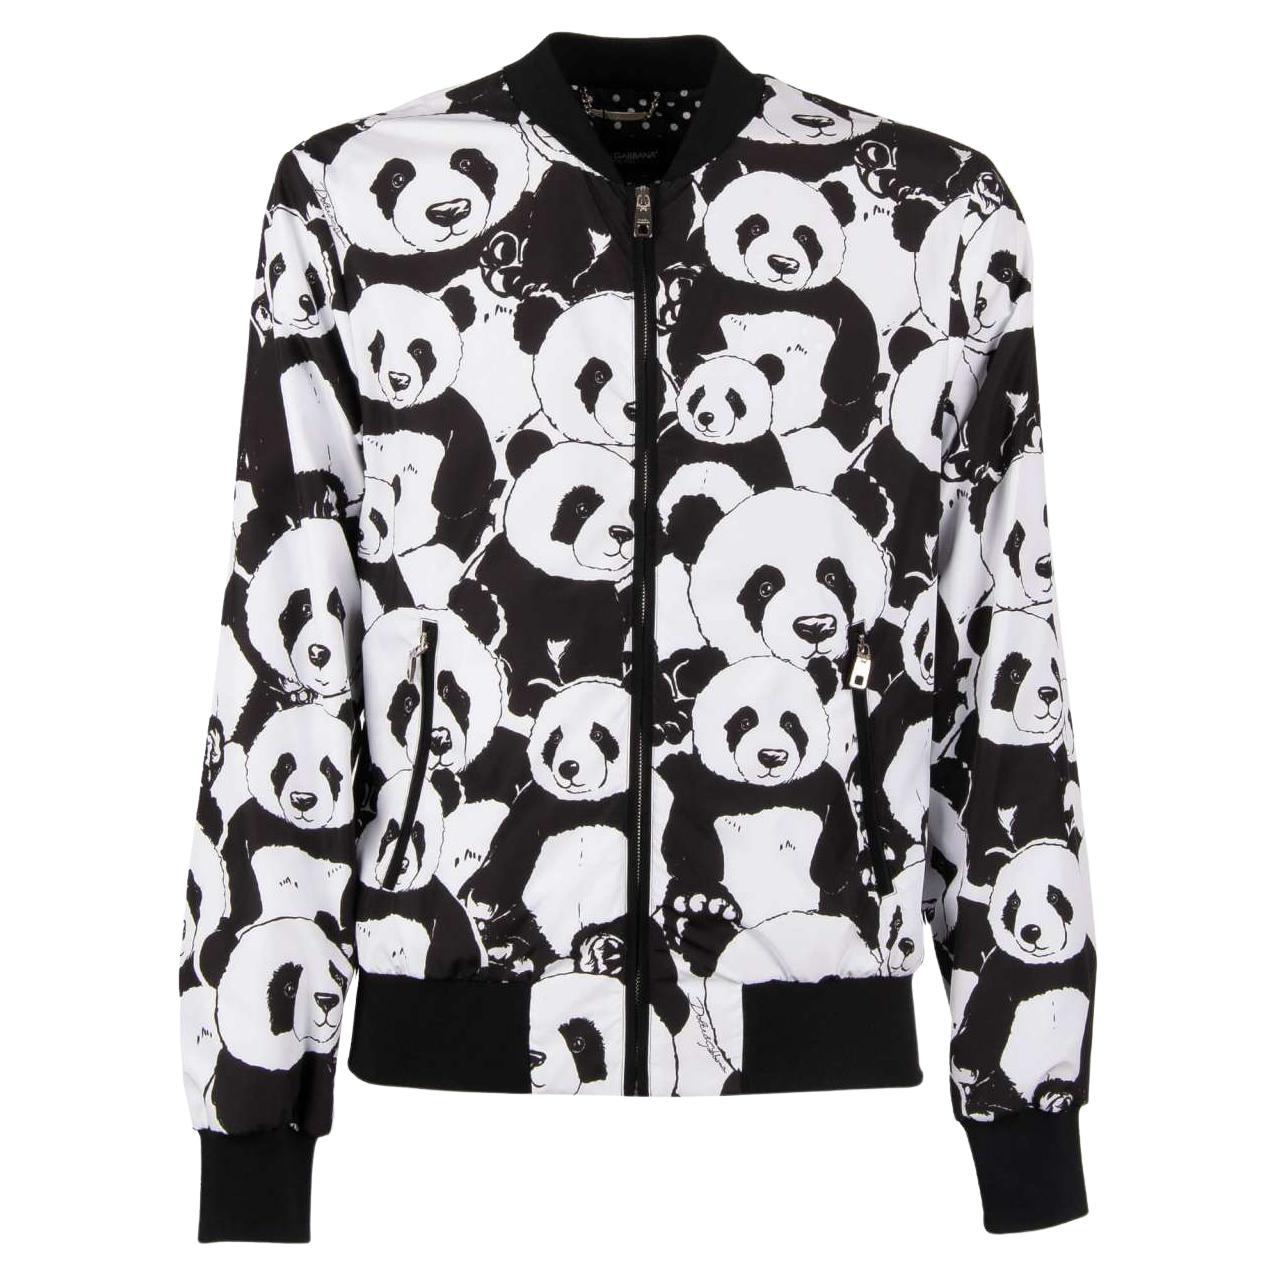 Dolce & Gabbana - Panda Printed Bomber Jacket with Logo Black White 46 For Sale